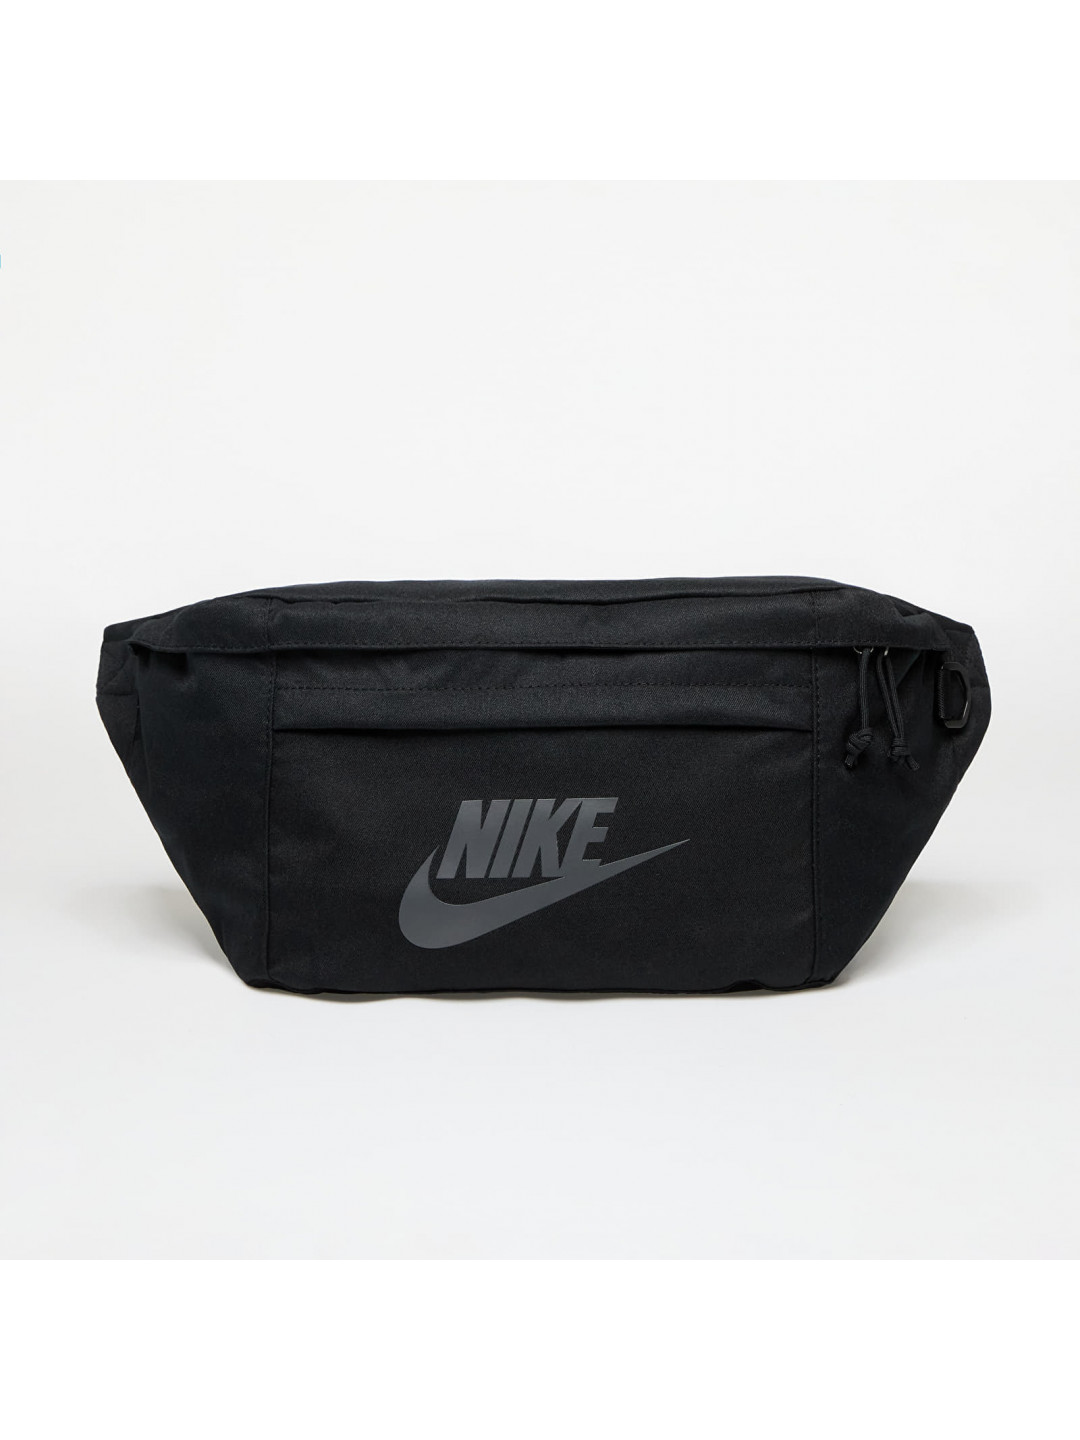 Nike Nike Tech Hip Pack Black Black Anthracite